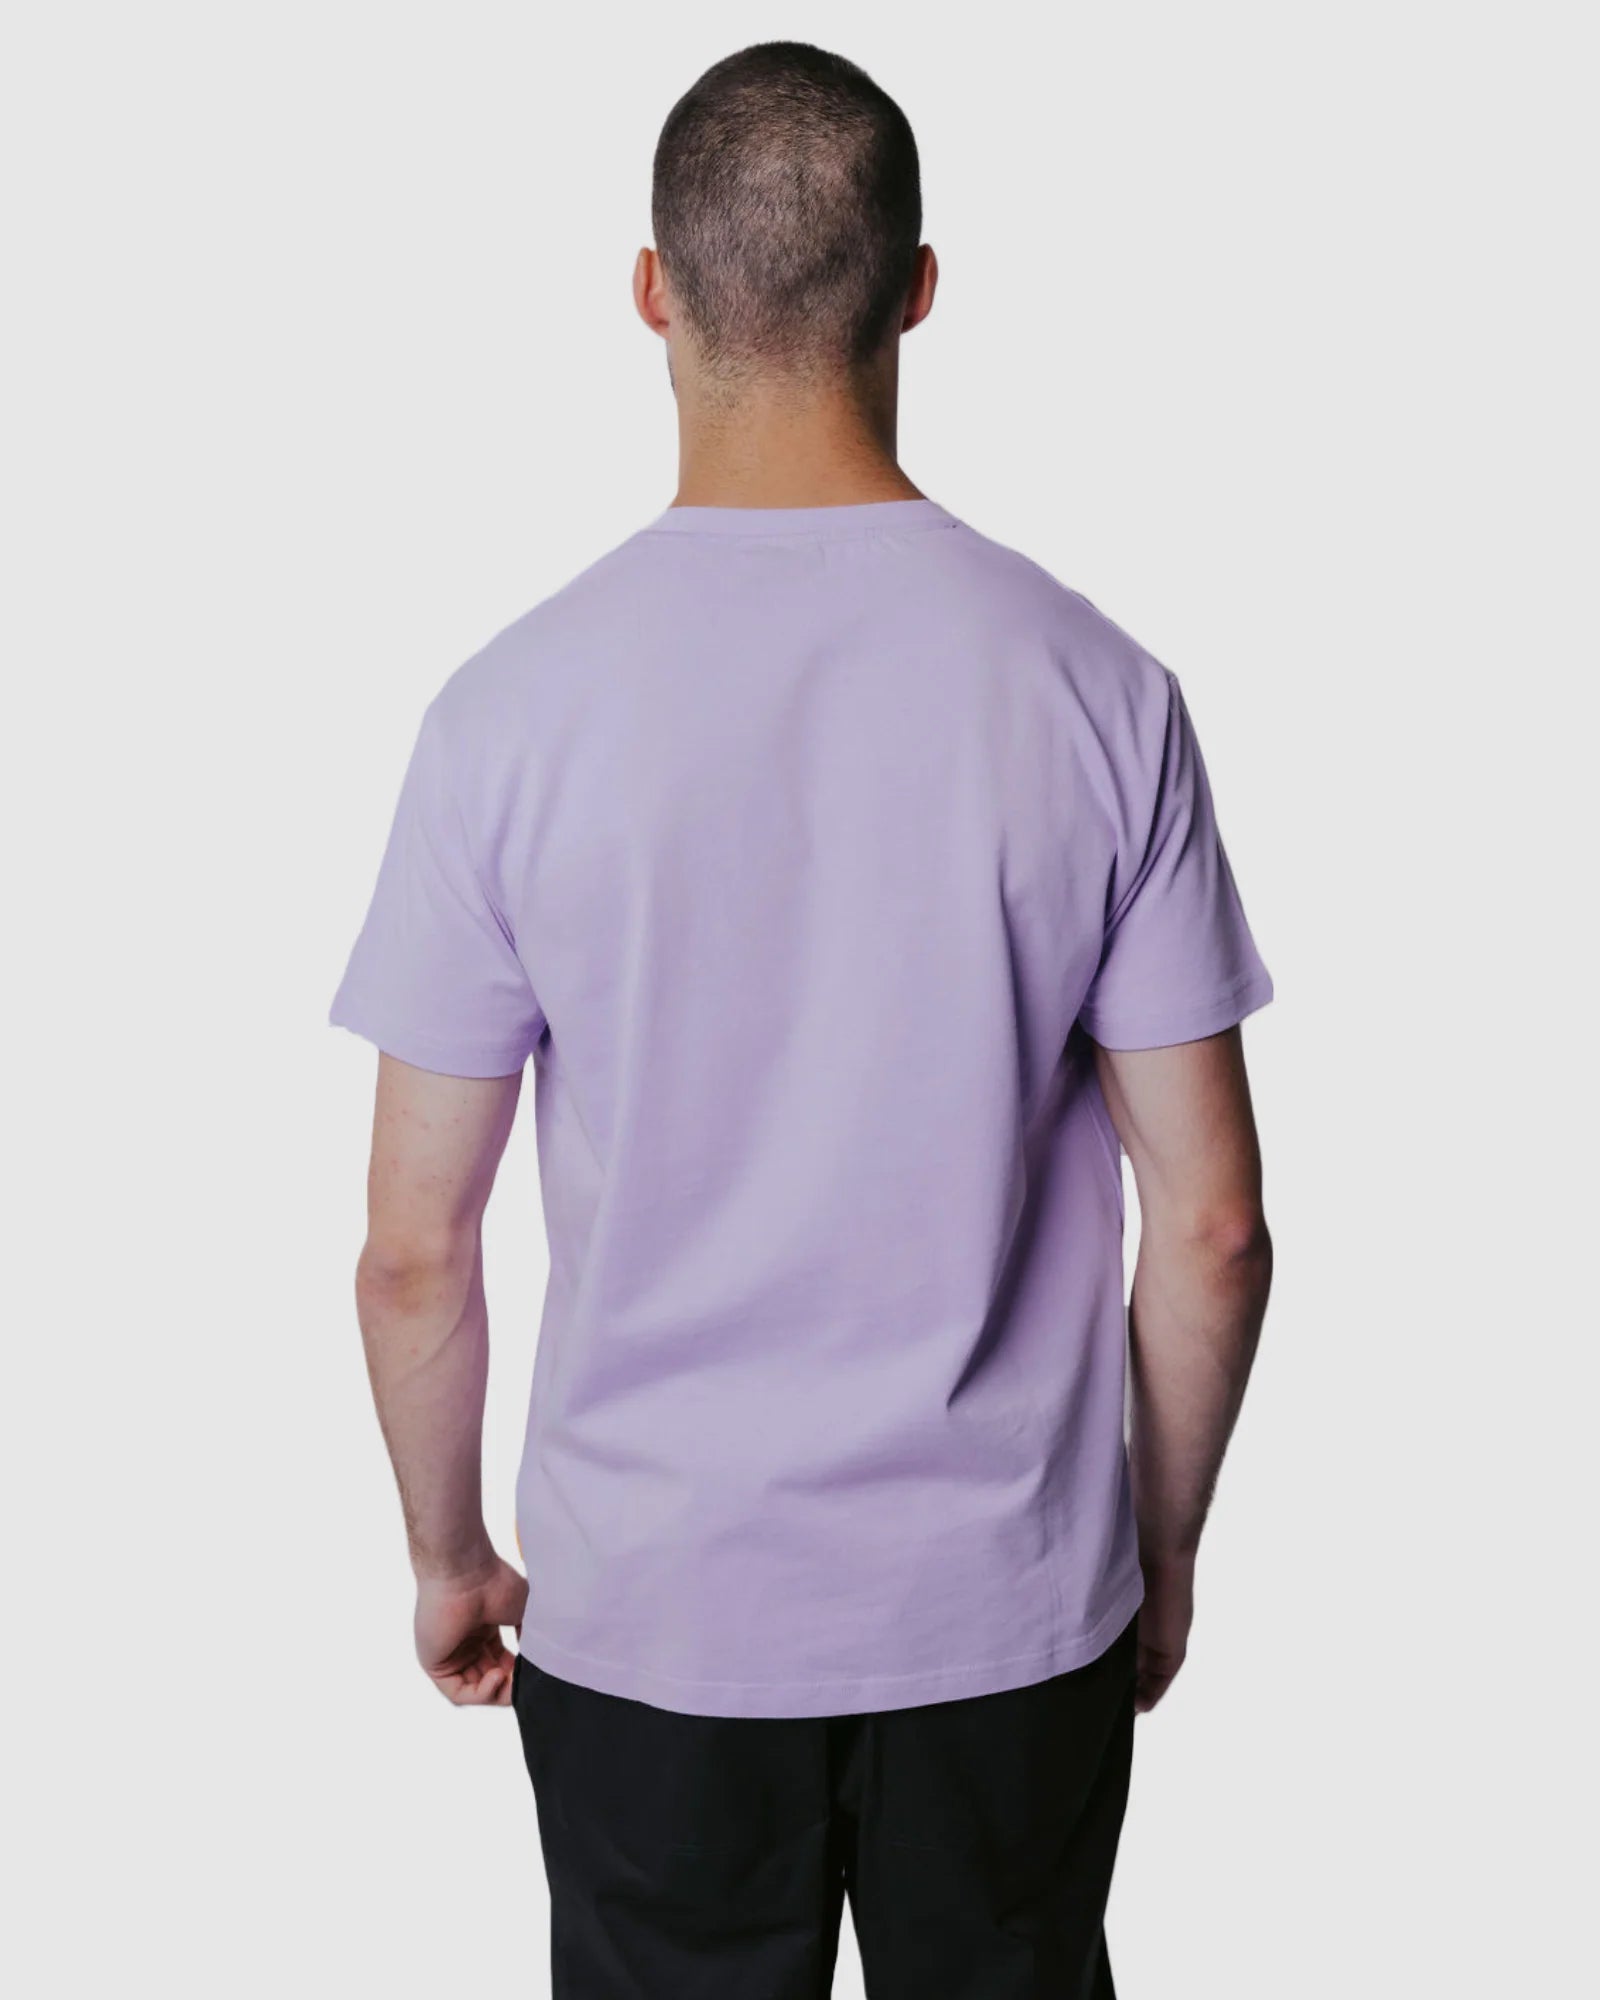 Justin Cassin Original T-Shirt in Lilac Color 4